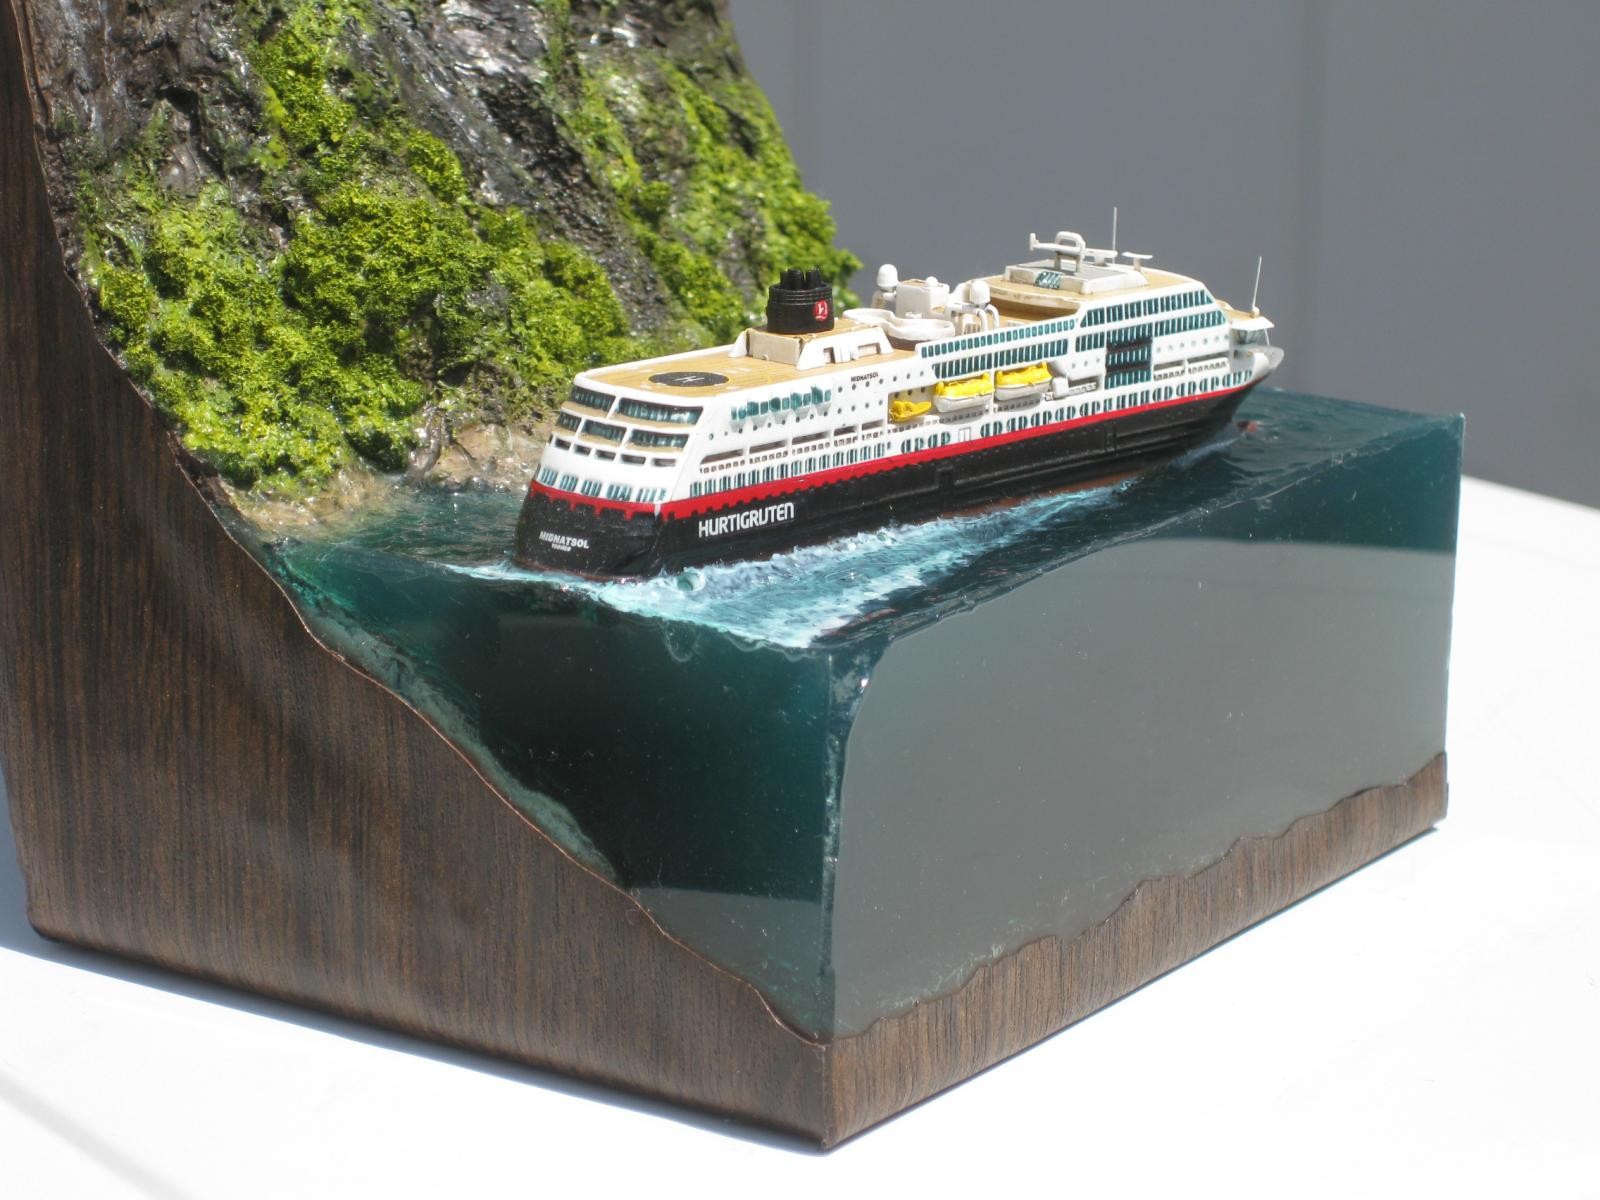 Maquette Navire MS Trollfjord - Echelle 1/1200 - Revell - Maquettes bateau  - Creavea